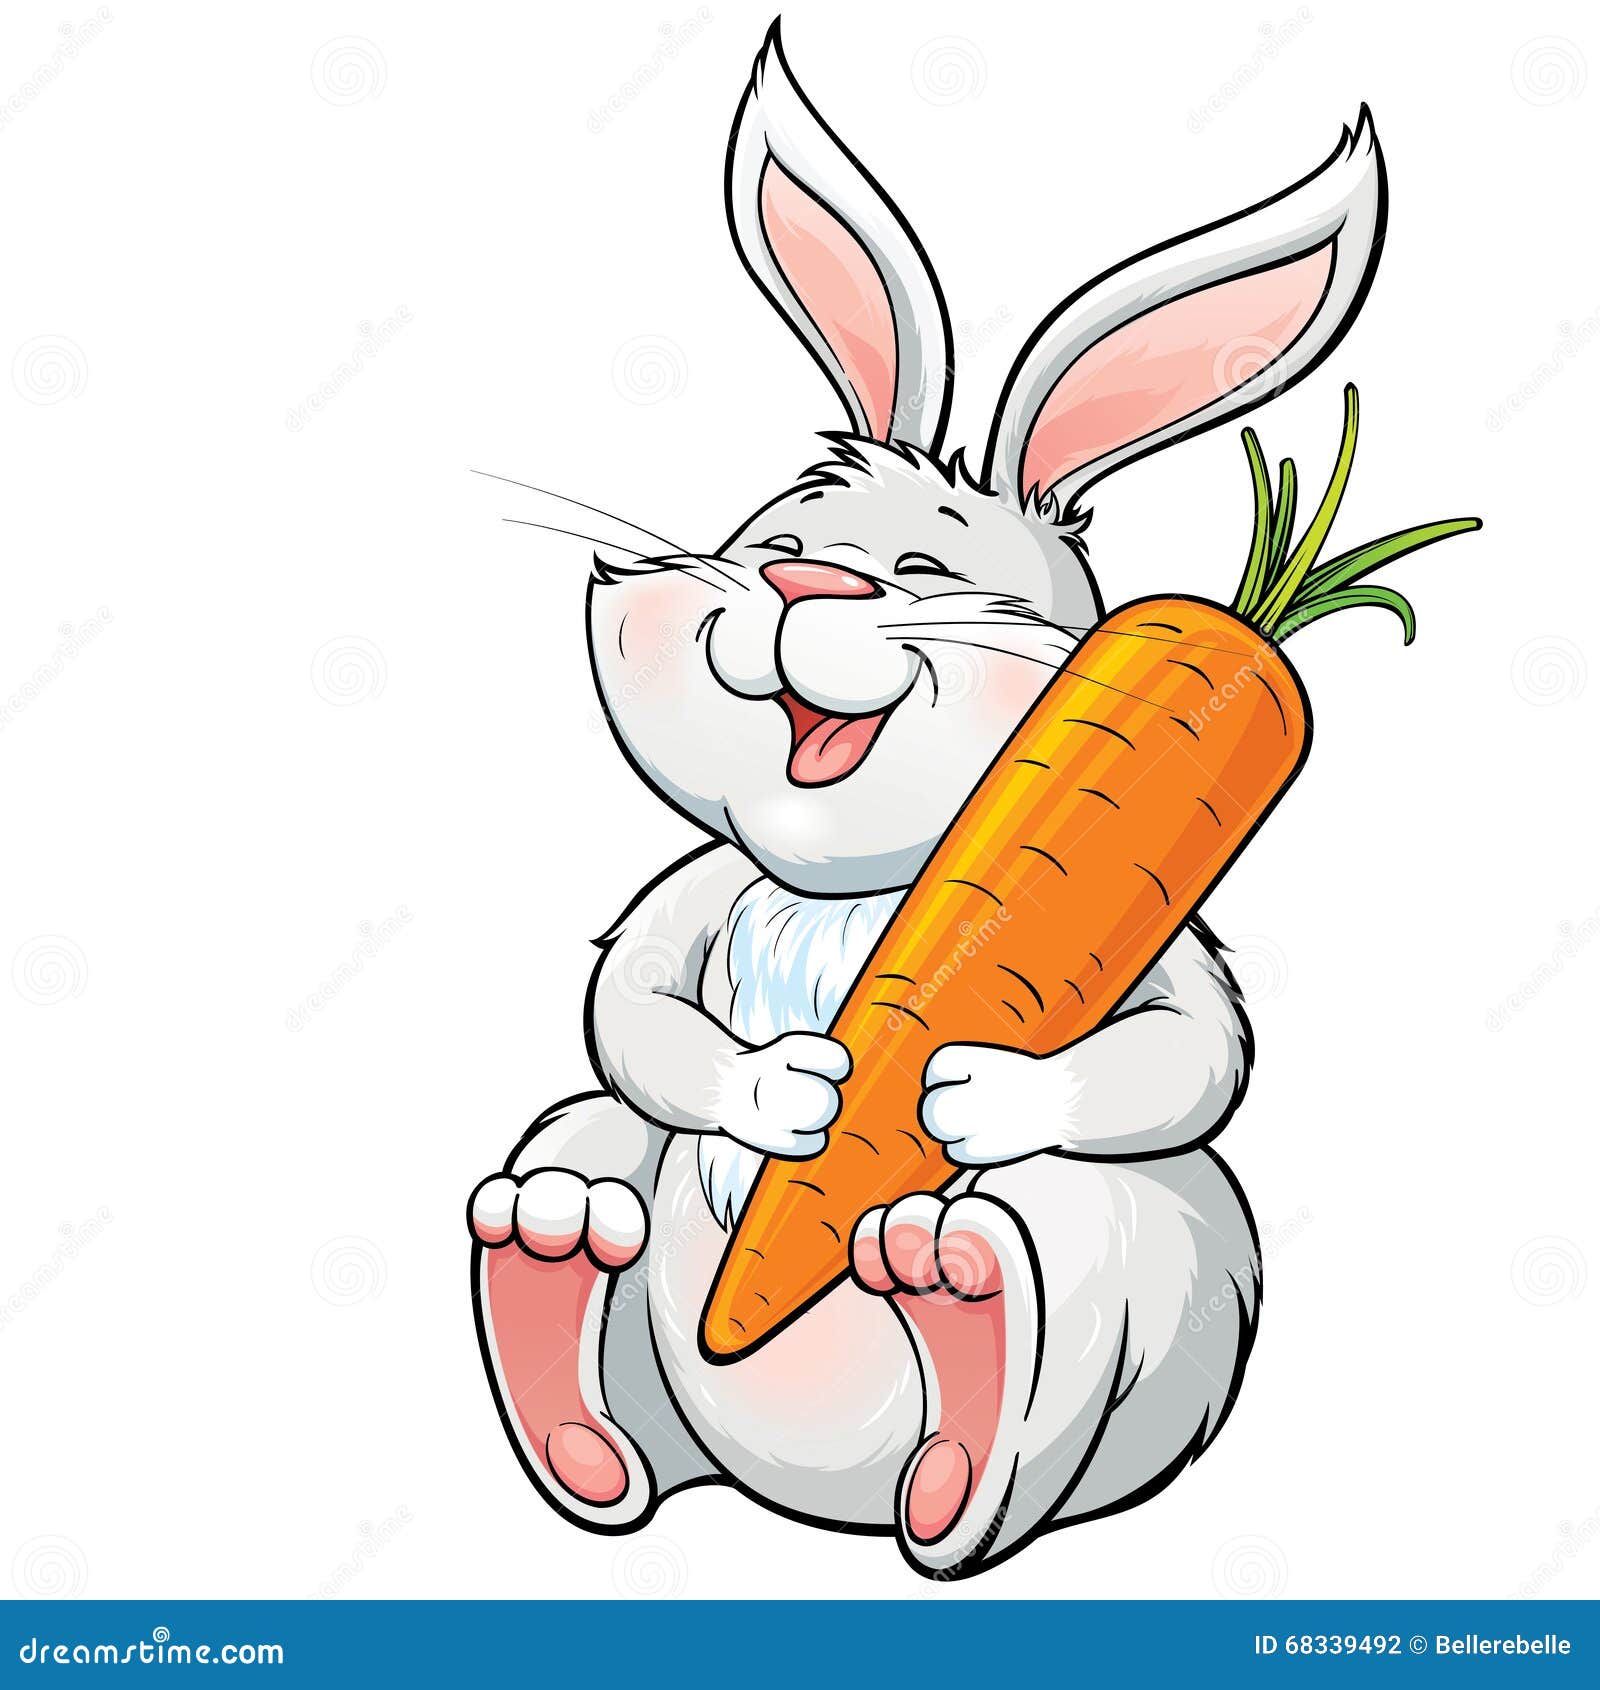 Зайчик морковь. Зайчик с морковкой. Pfzw DC vjhrjdrjq. Зайчик ест морковку. Зайчик кушает морковку.